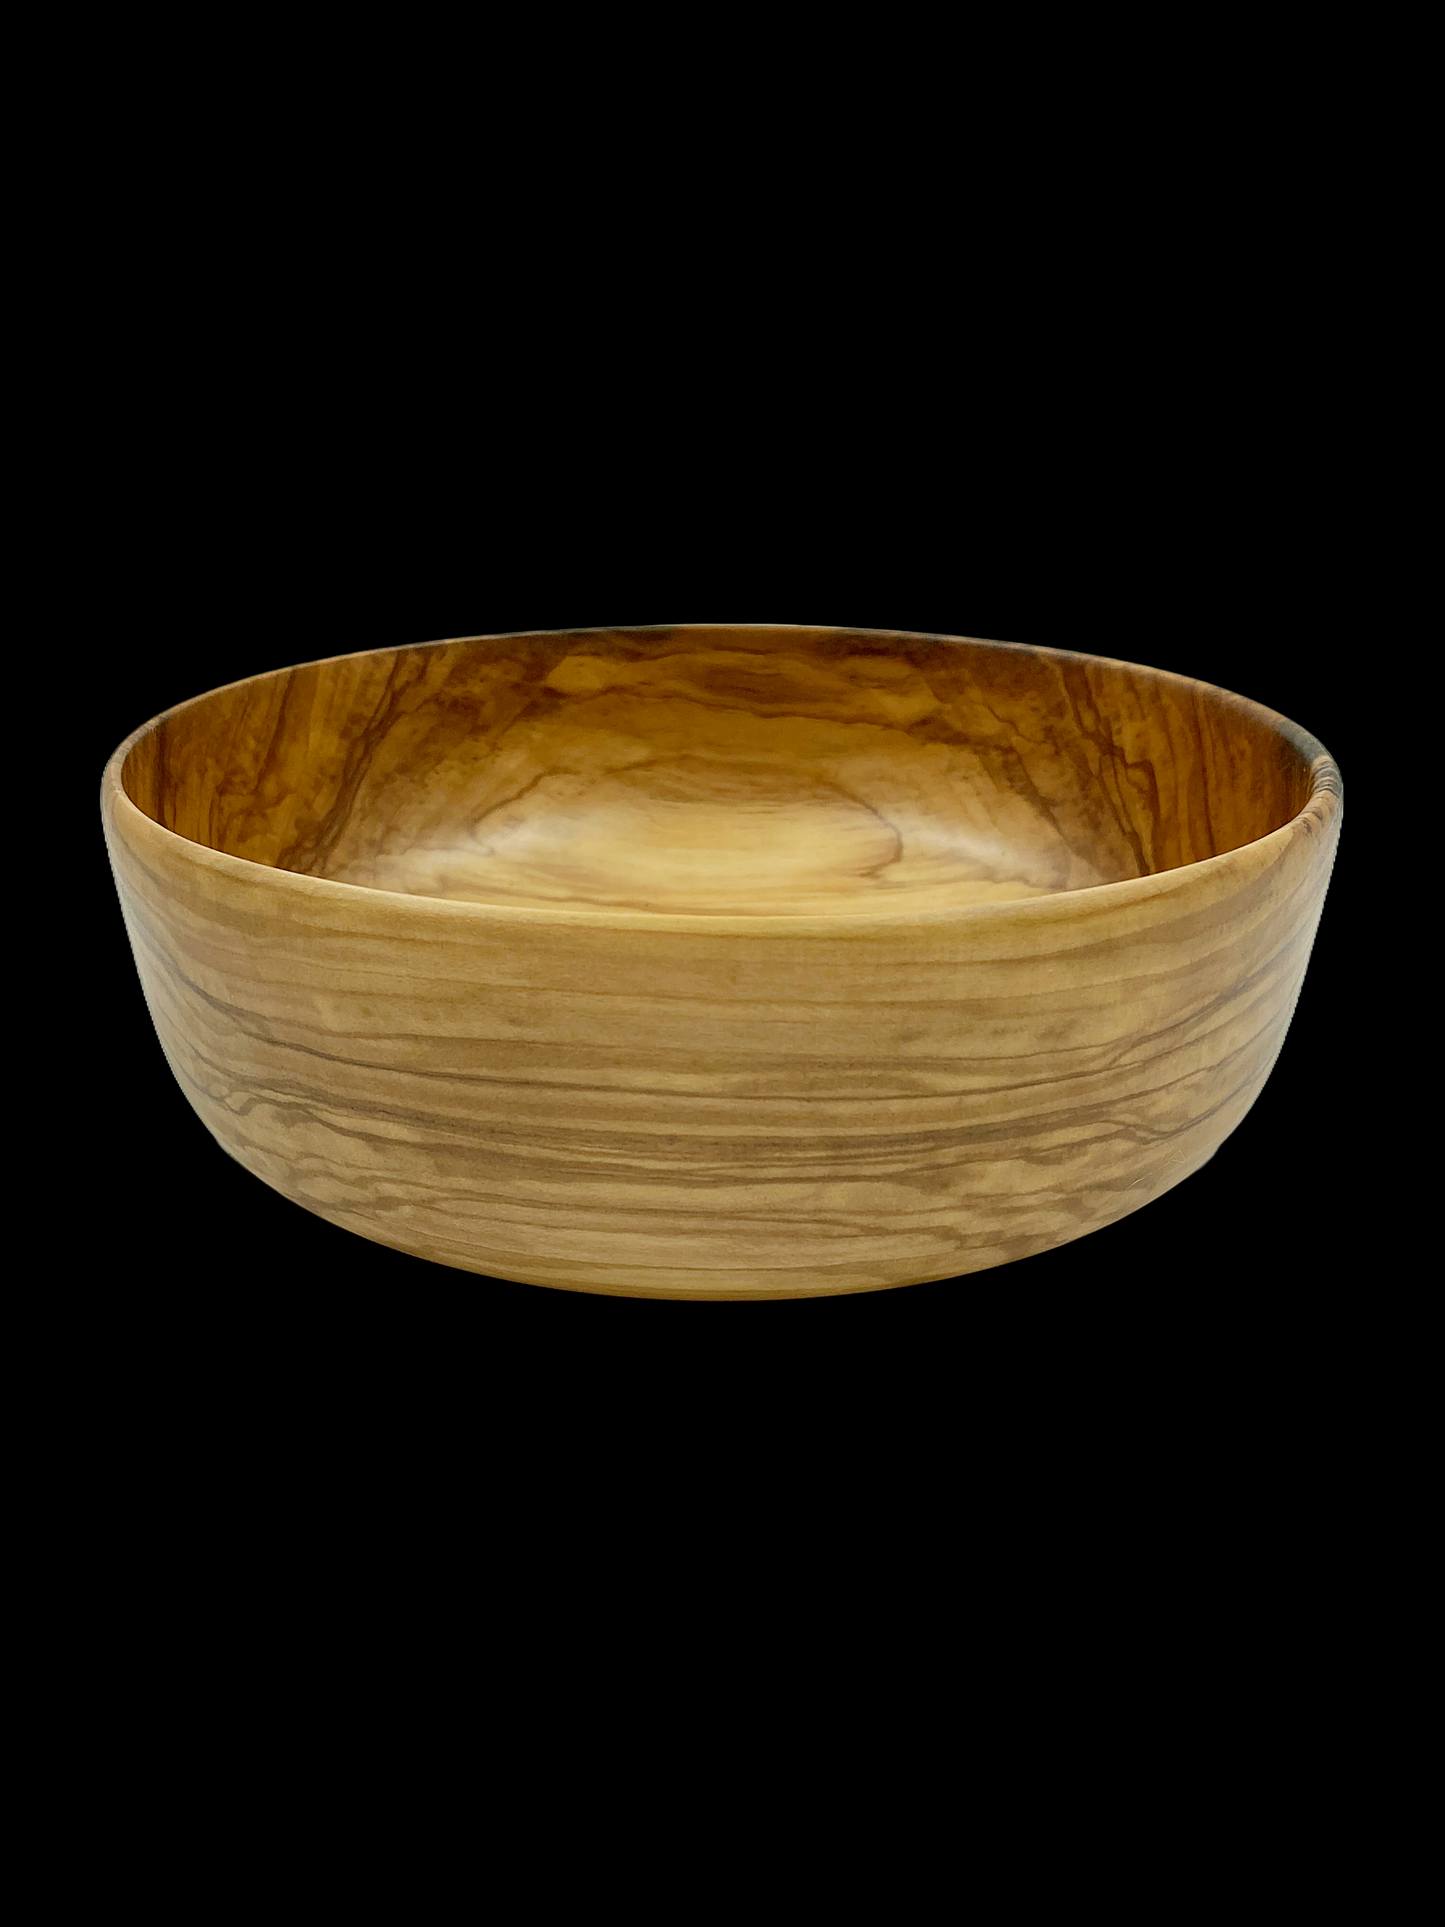 Italian olive wood bowl